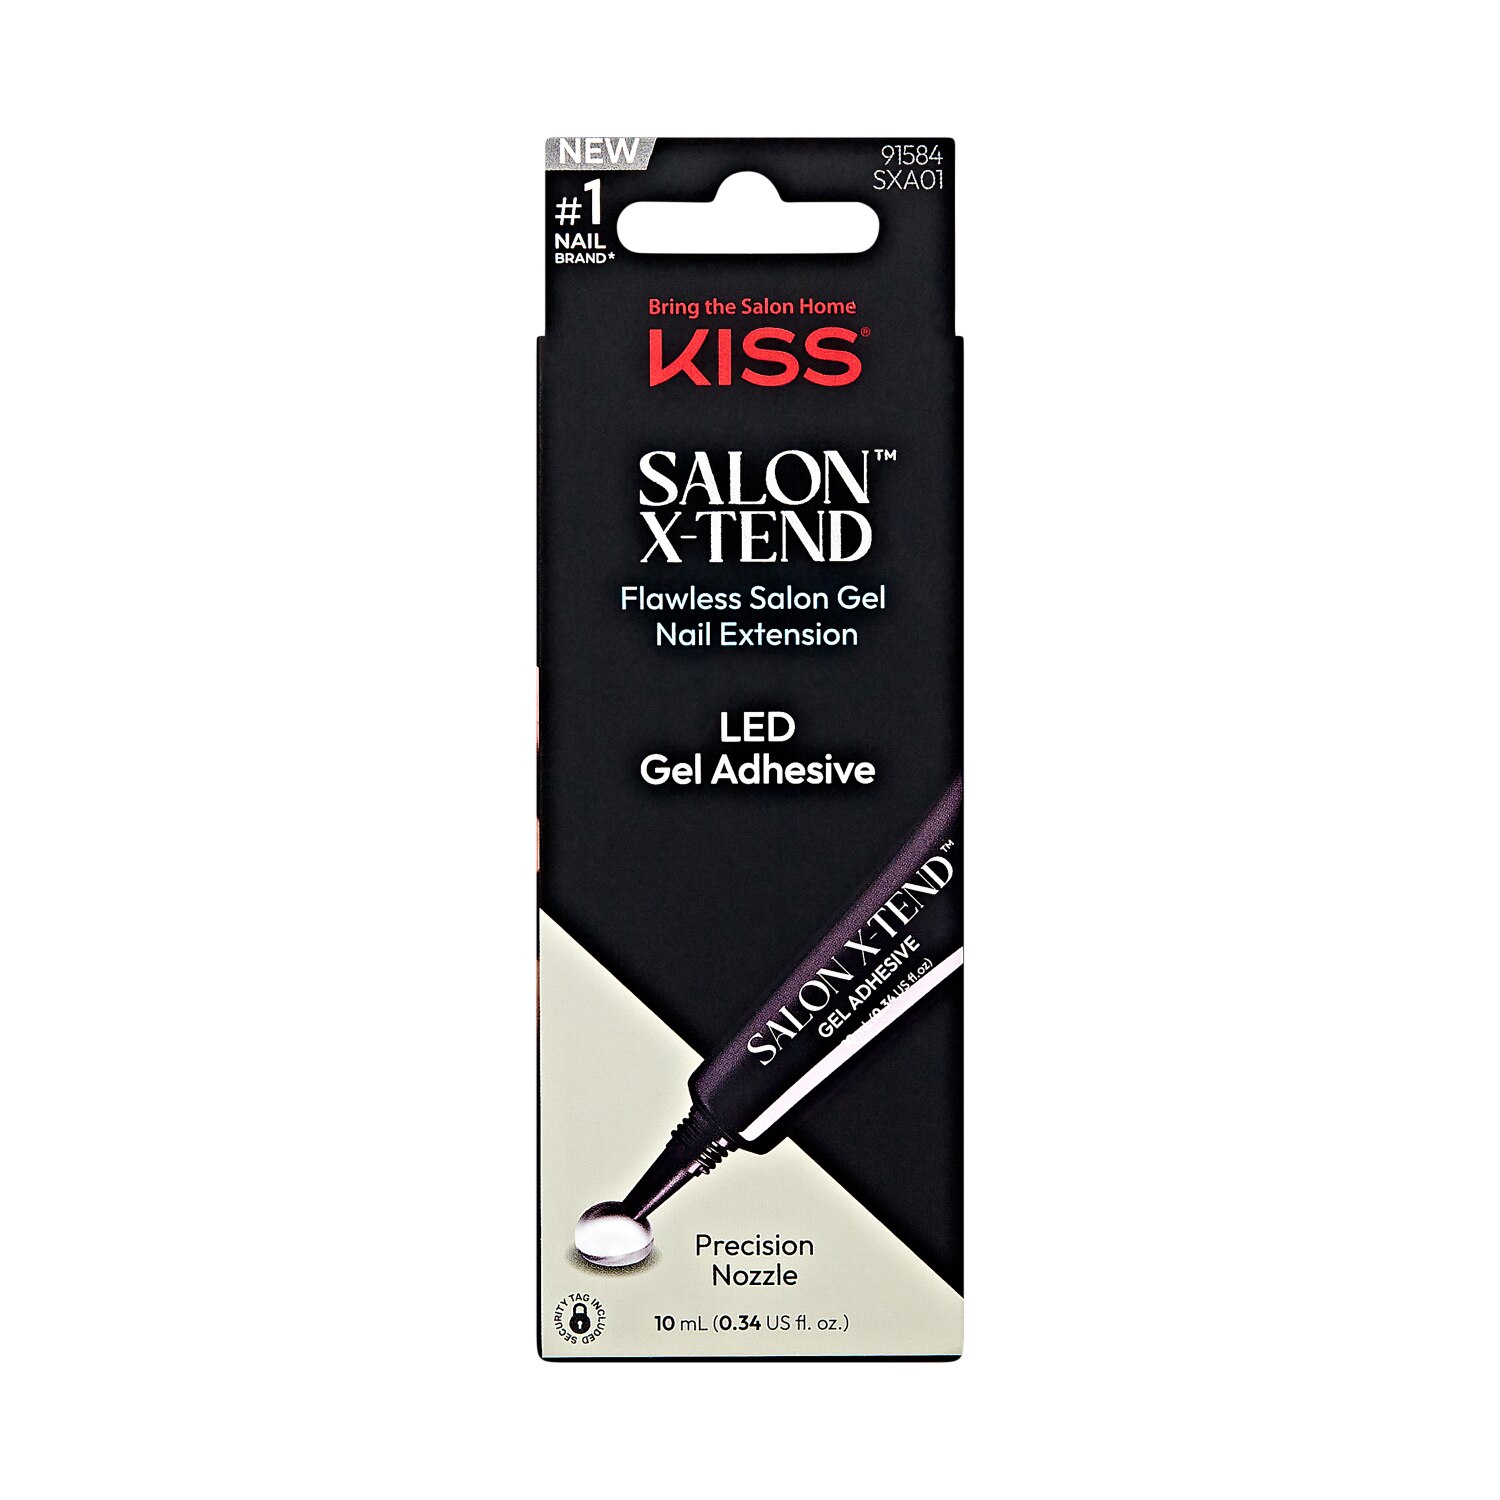 KISS Salon X-tend LED Gel Adhesive Refill , CVS